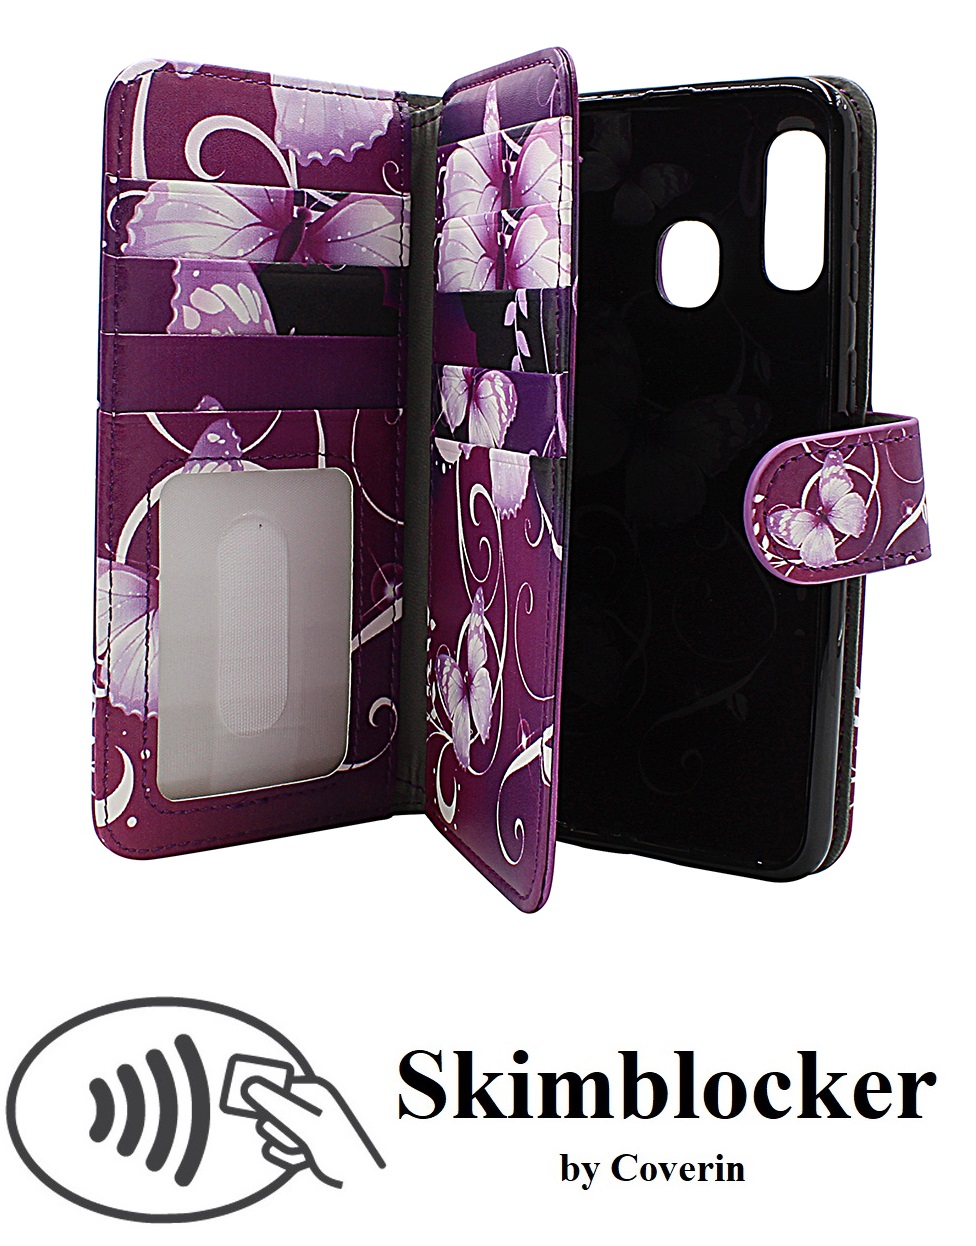 Skimblocker XL Designwallet Samsung Galaxy A40 (A405FN/DS)